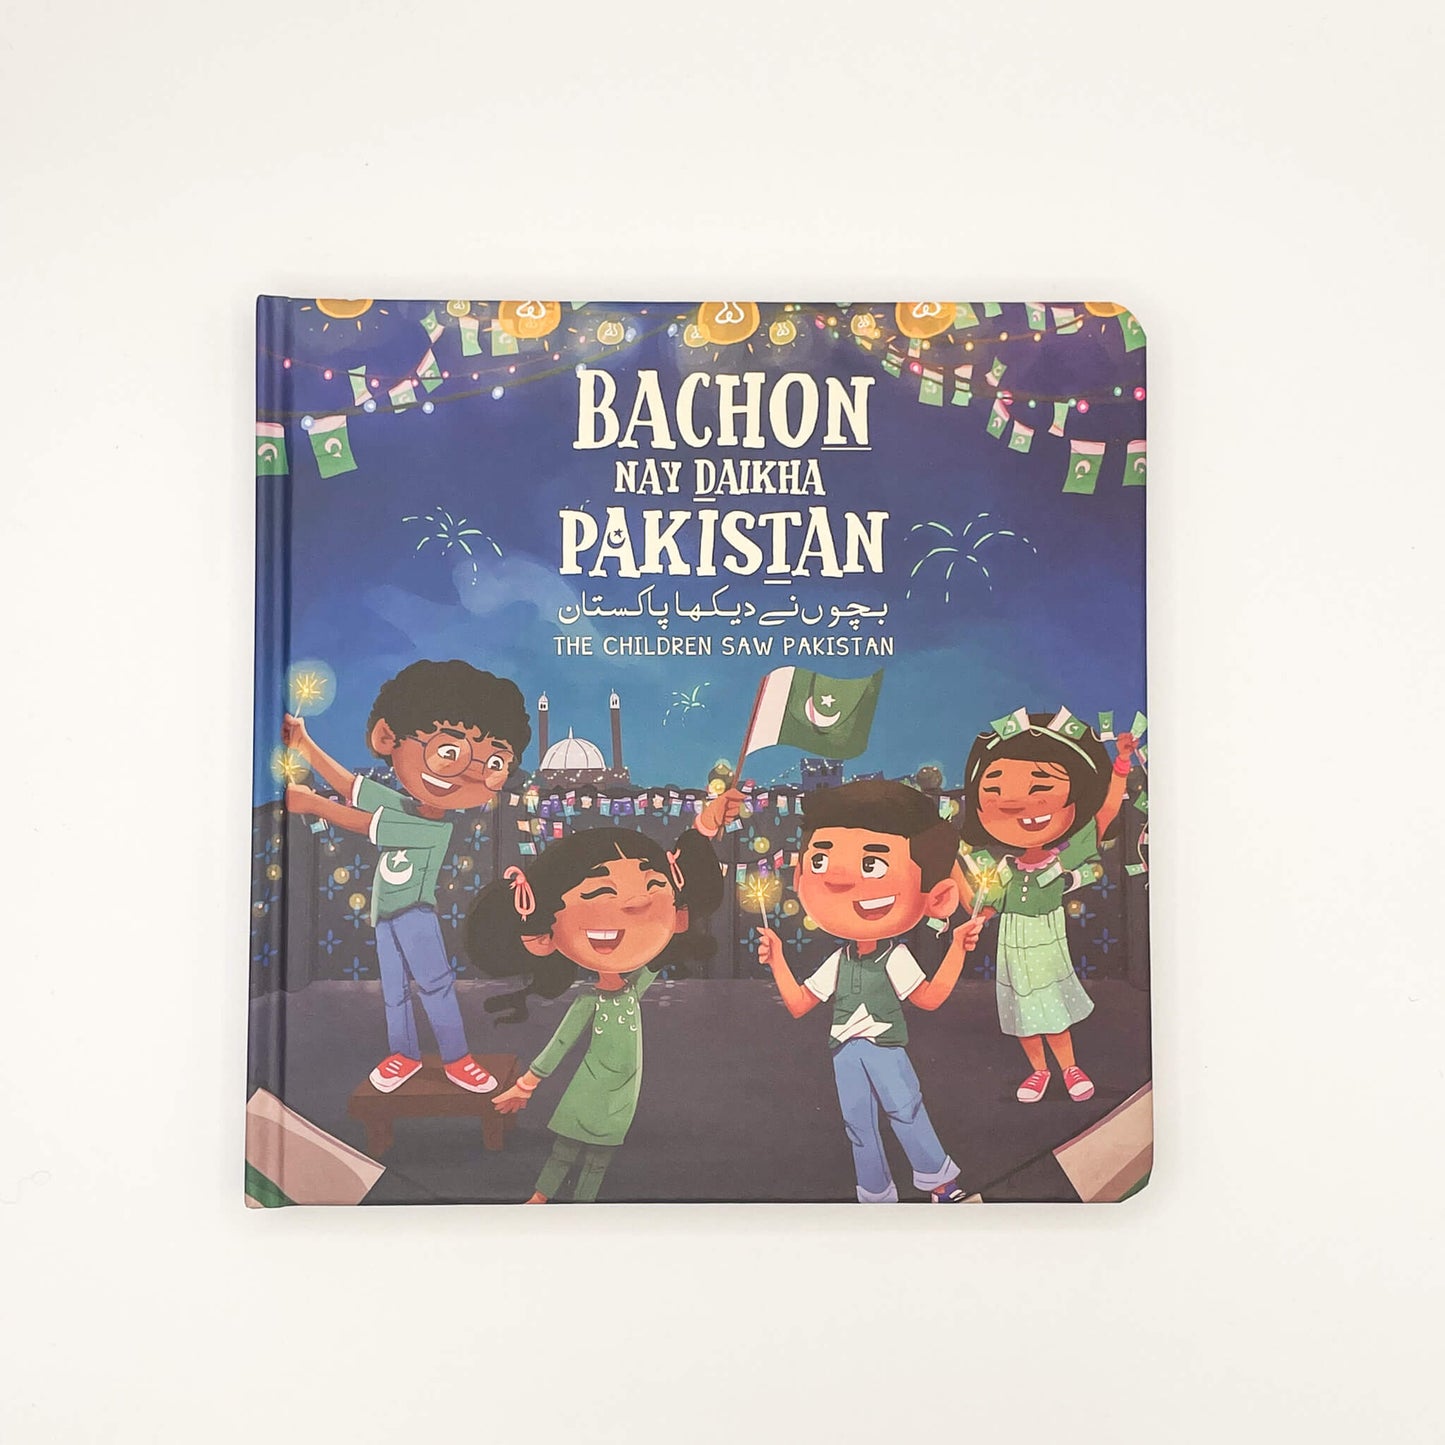 Bachon Nay Daikha Pakistan (The Children saw Pakistan) - Stories